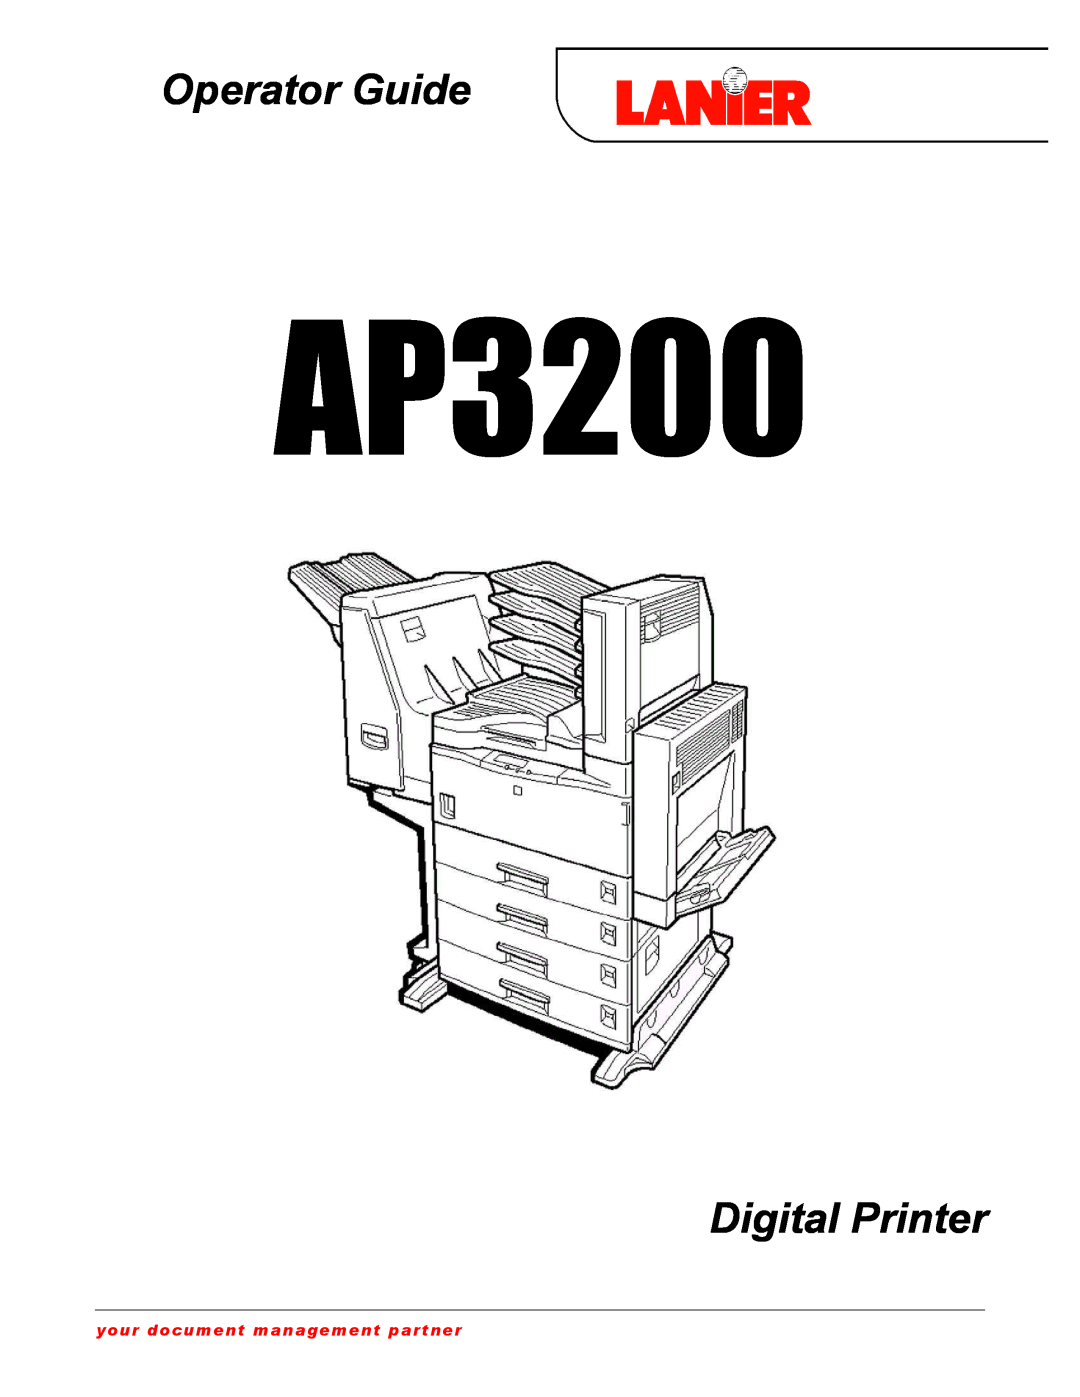 Lanier AP3200 manual Operator Guide, Digital Printer, your document management partner 